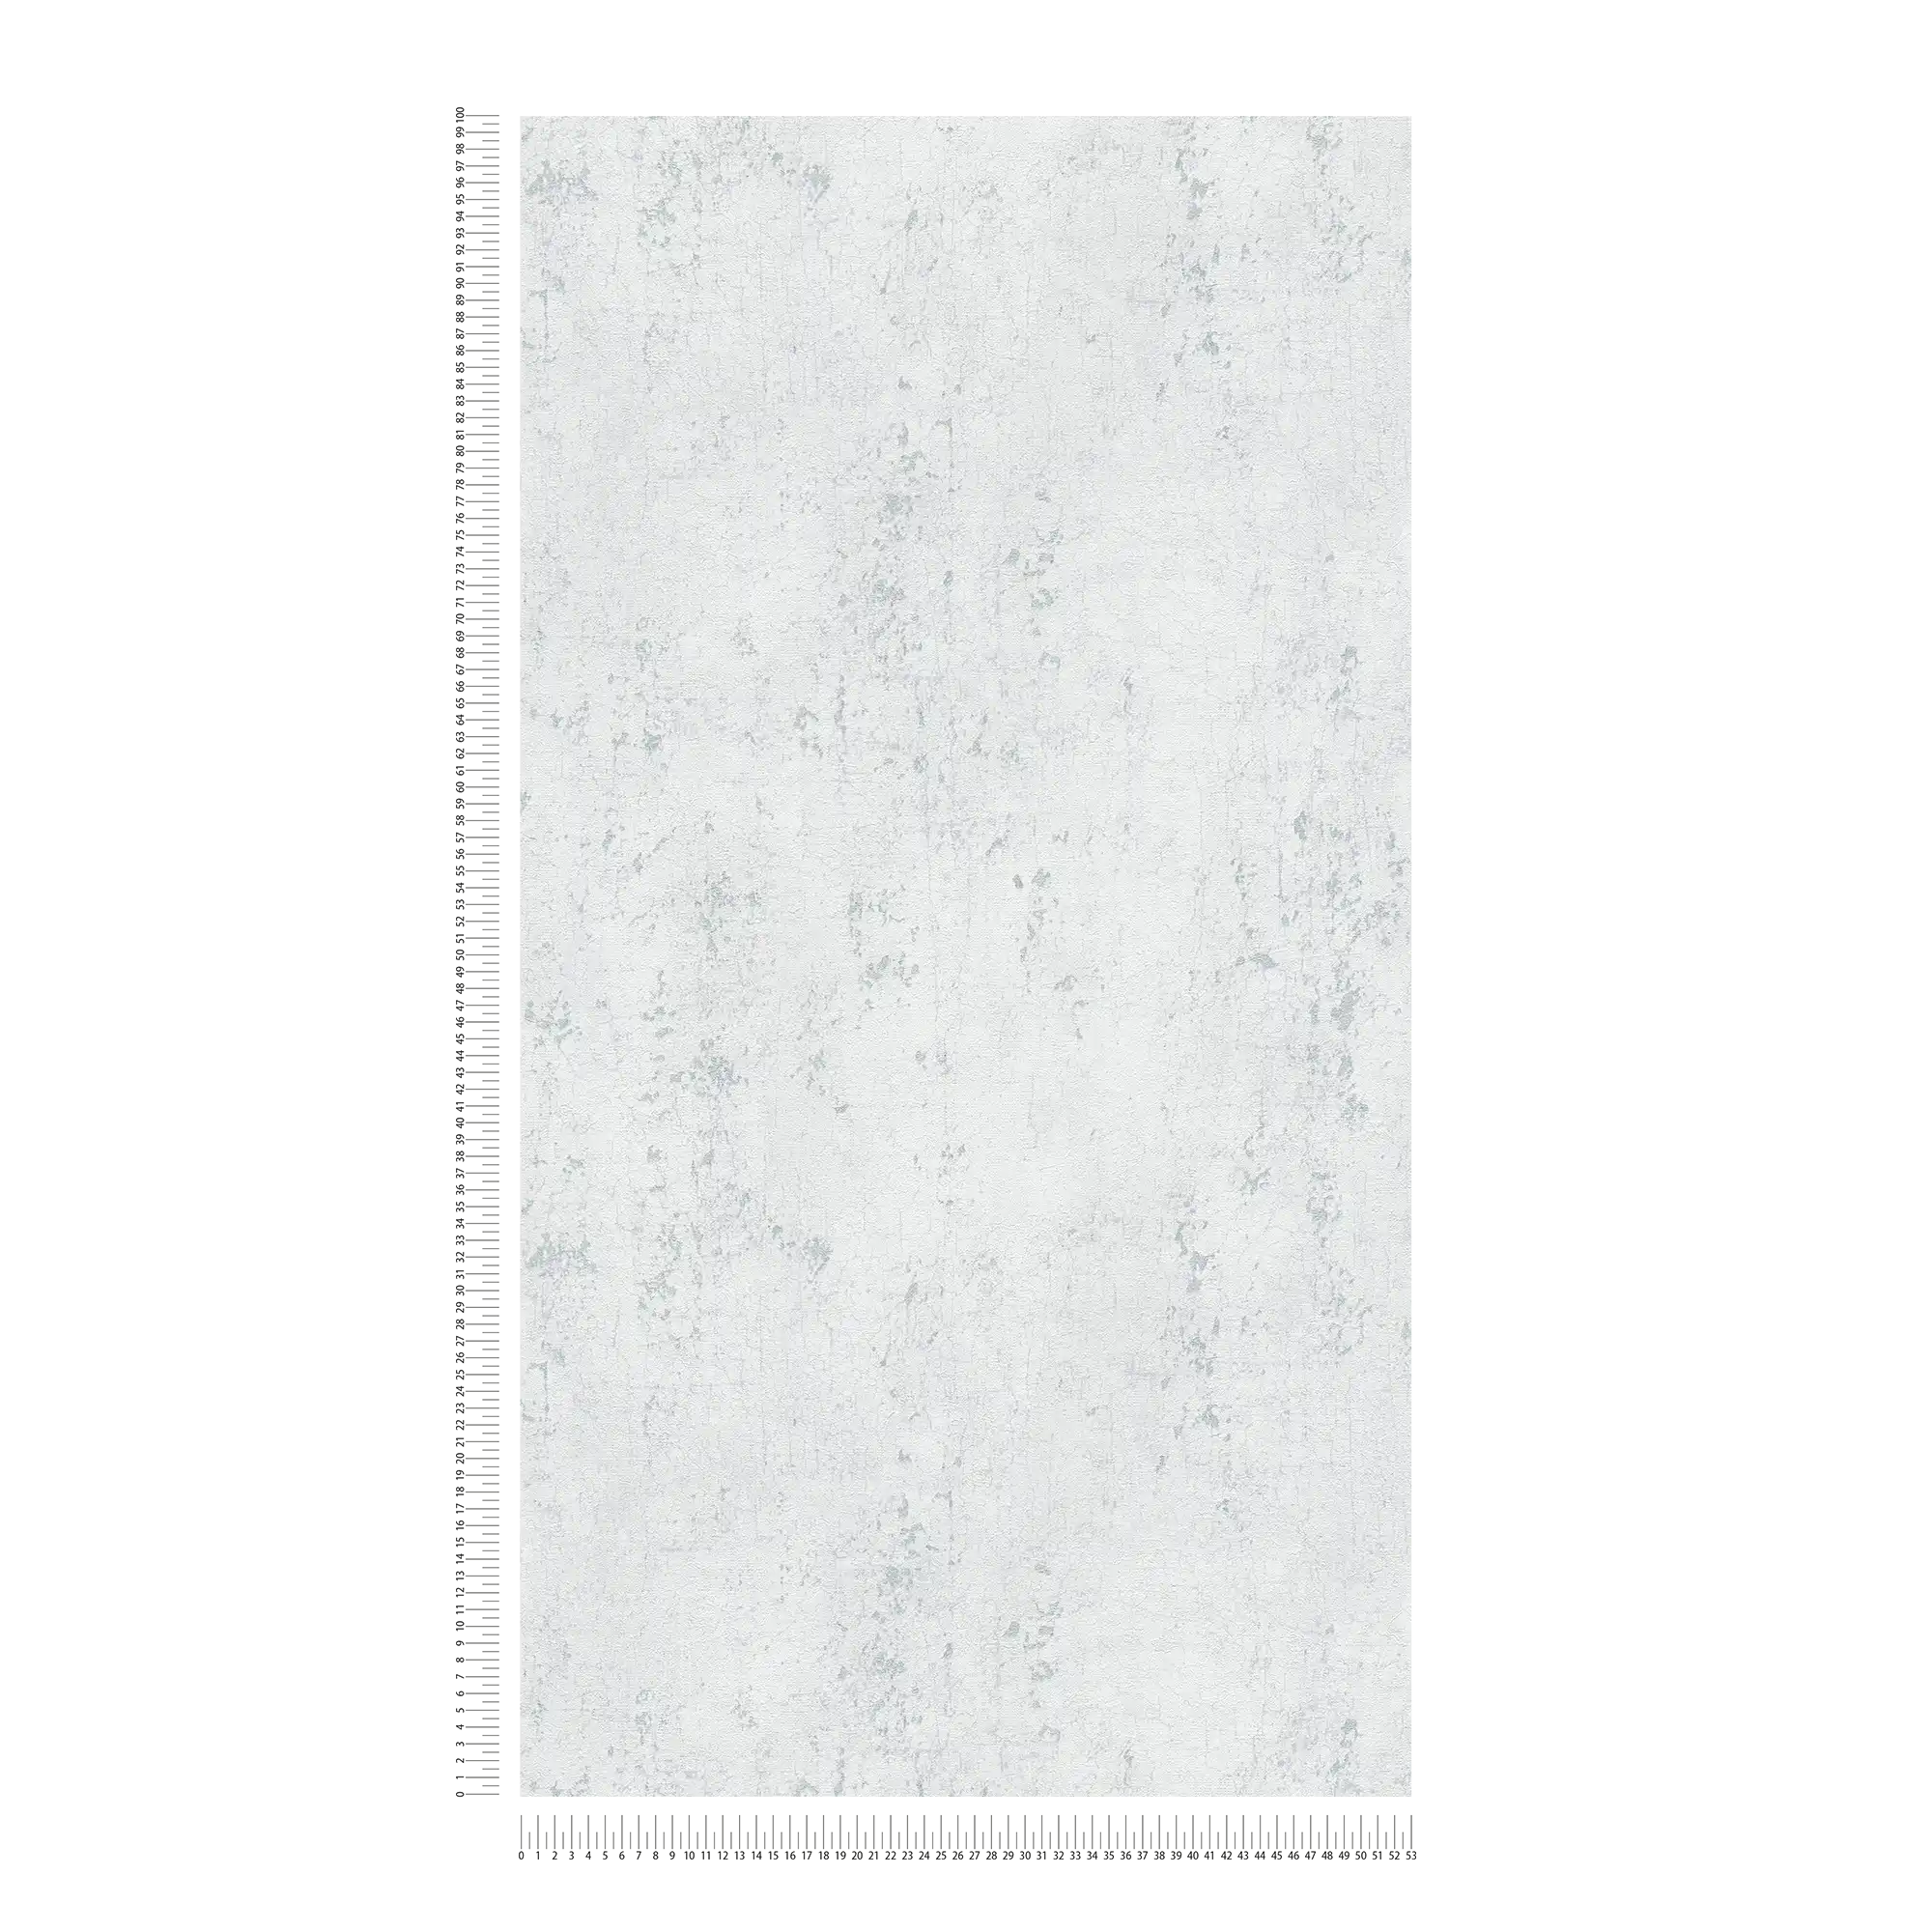             papel pintado de yeso óptico gris claro con craquelado plateado - gris, metálico, blanco
        